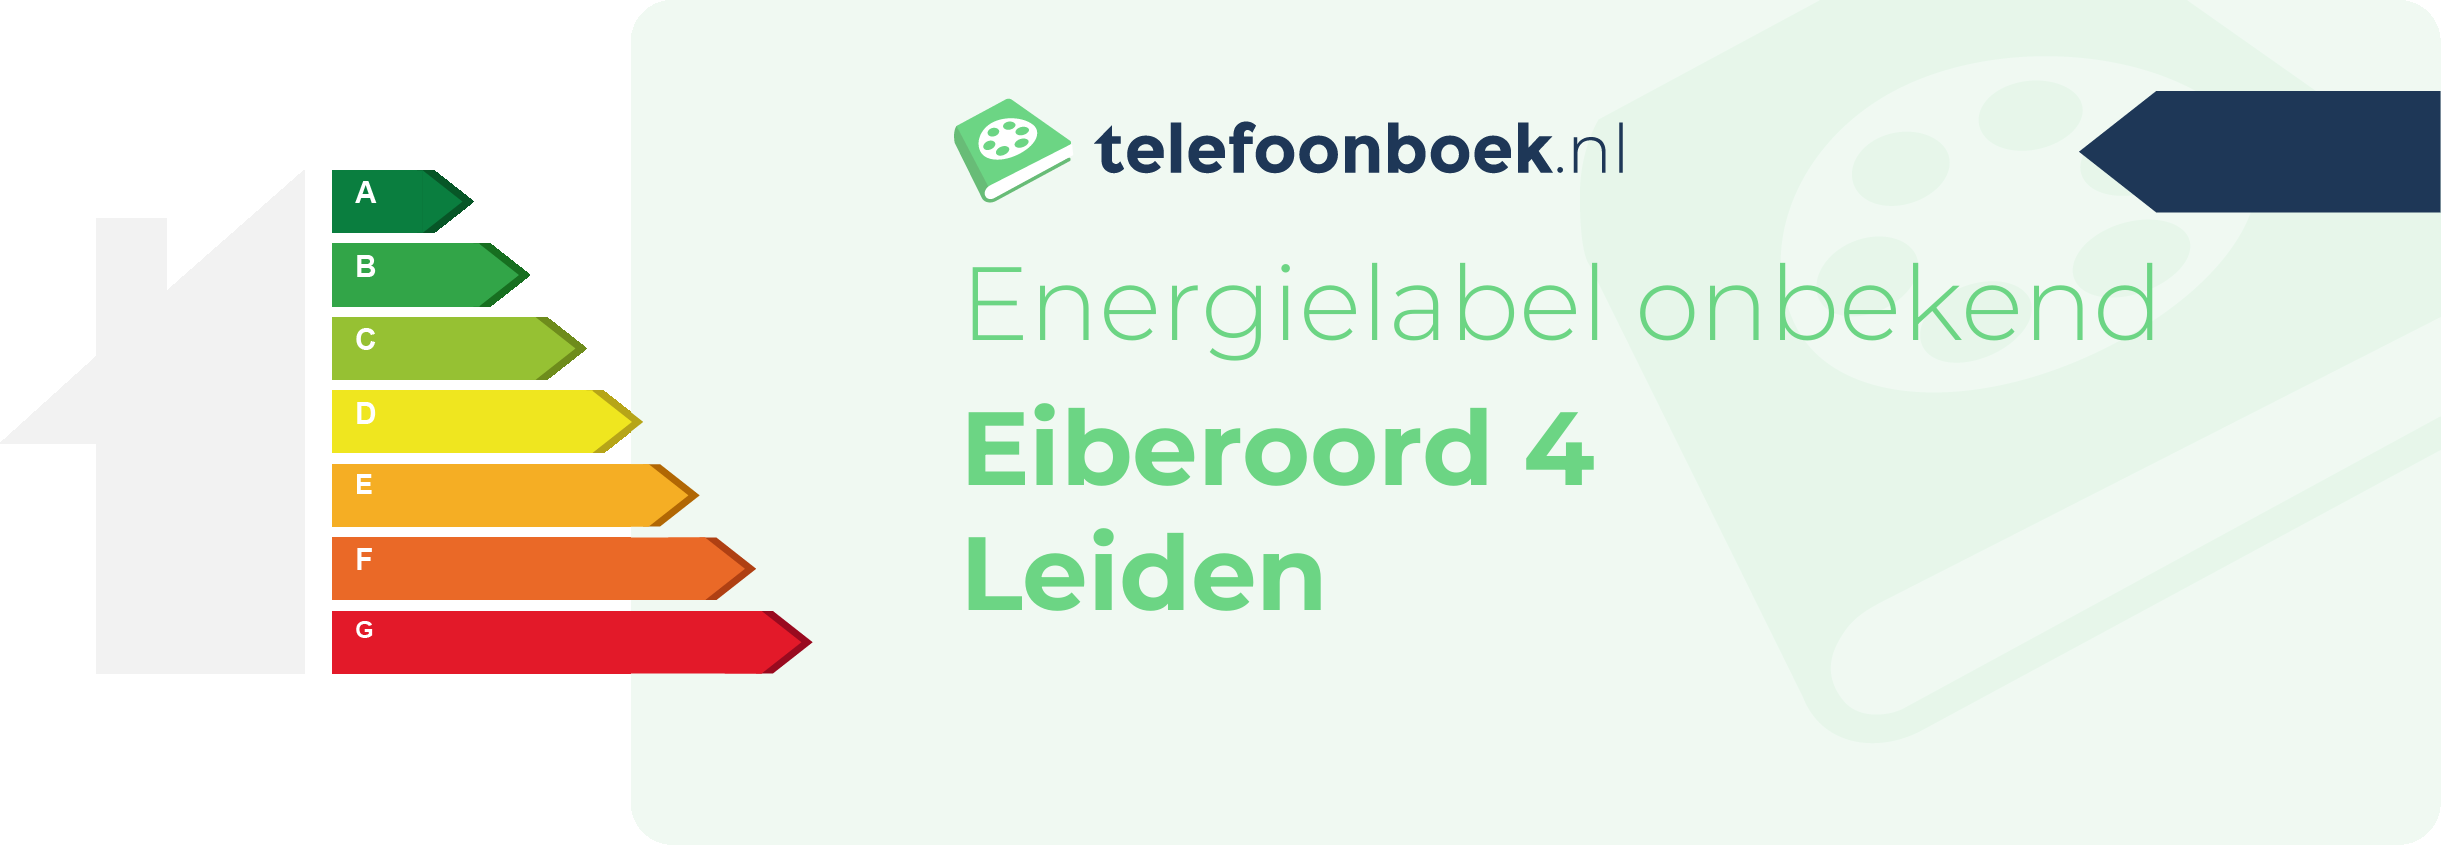 Energielabel Eiberoord 4 Leiden